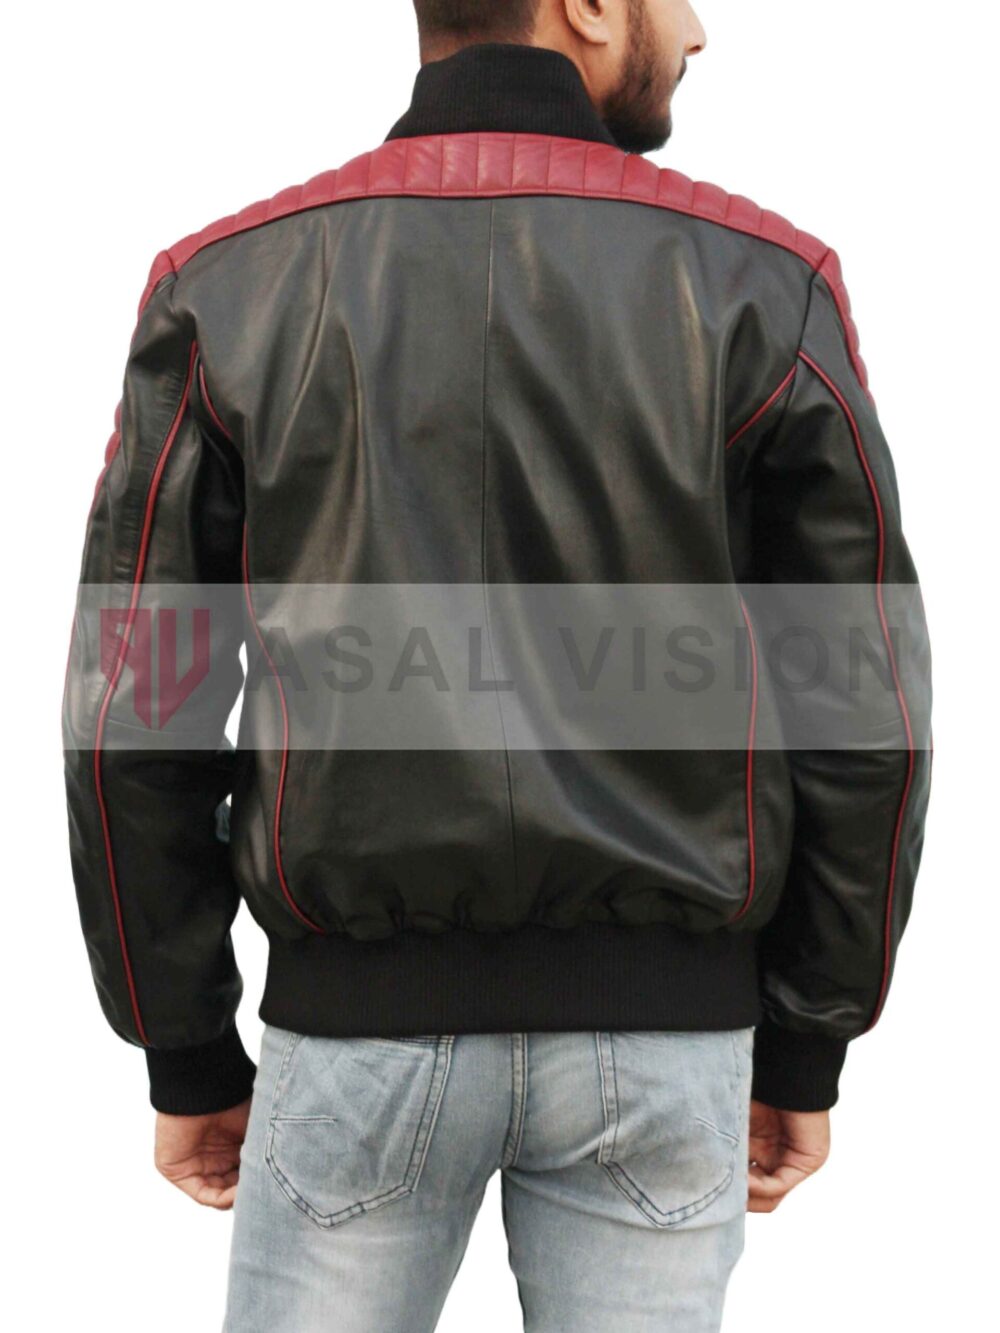 Ryan Gosling Stunt Team Bomber Leather Jacket With Hood